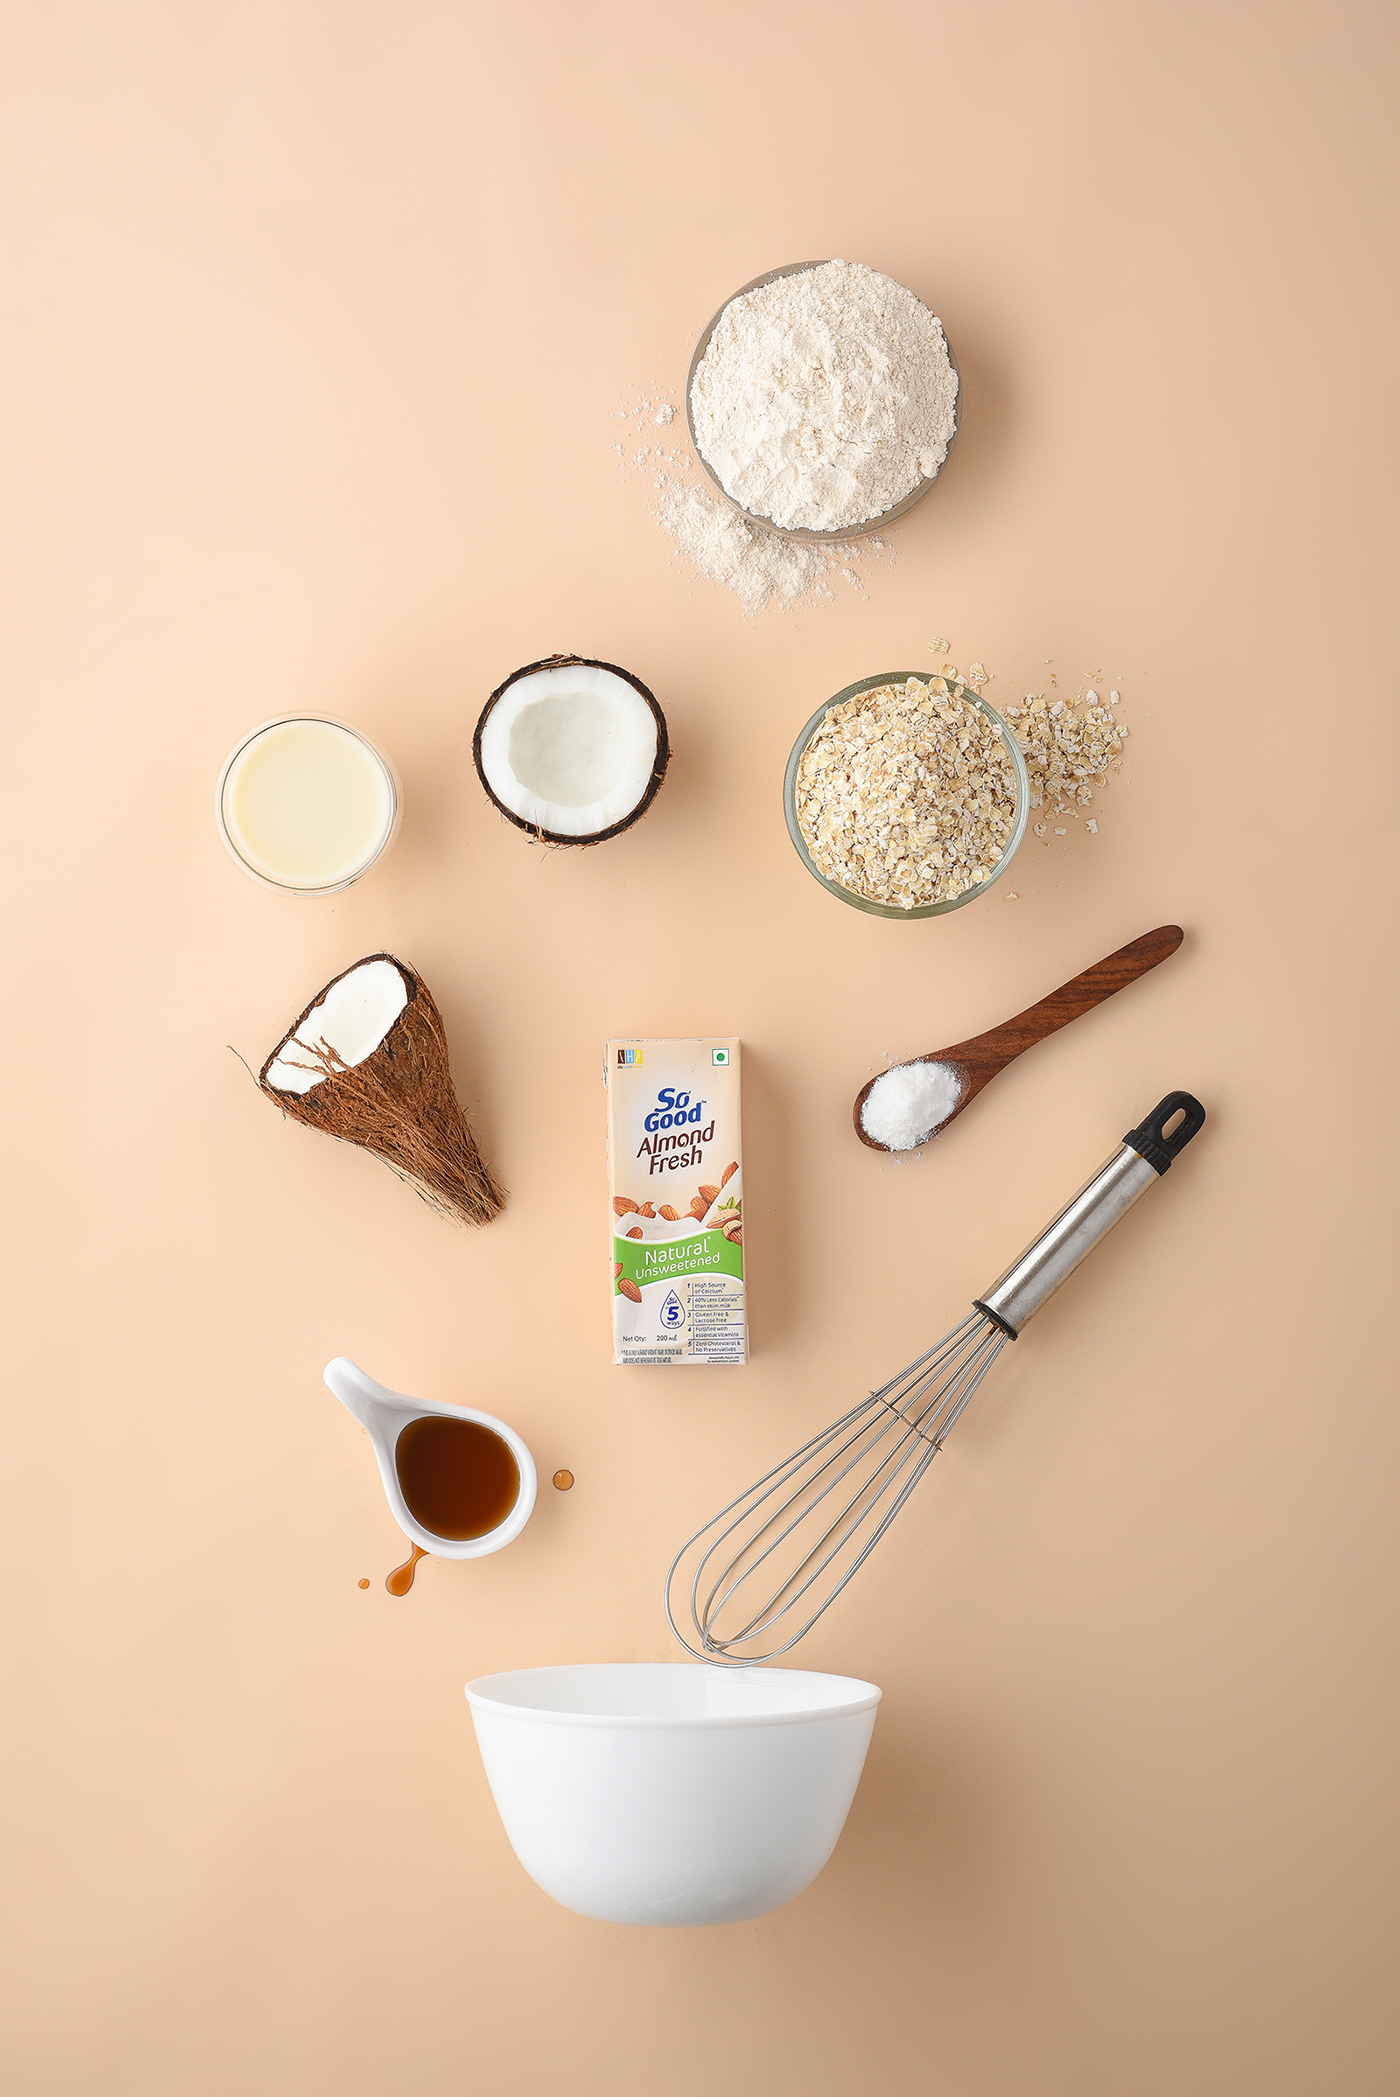 sogood almondmilk almond vegan product productphotography Food  foodstyling milk spalsh